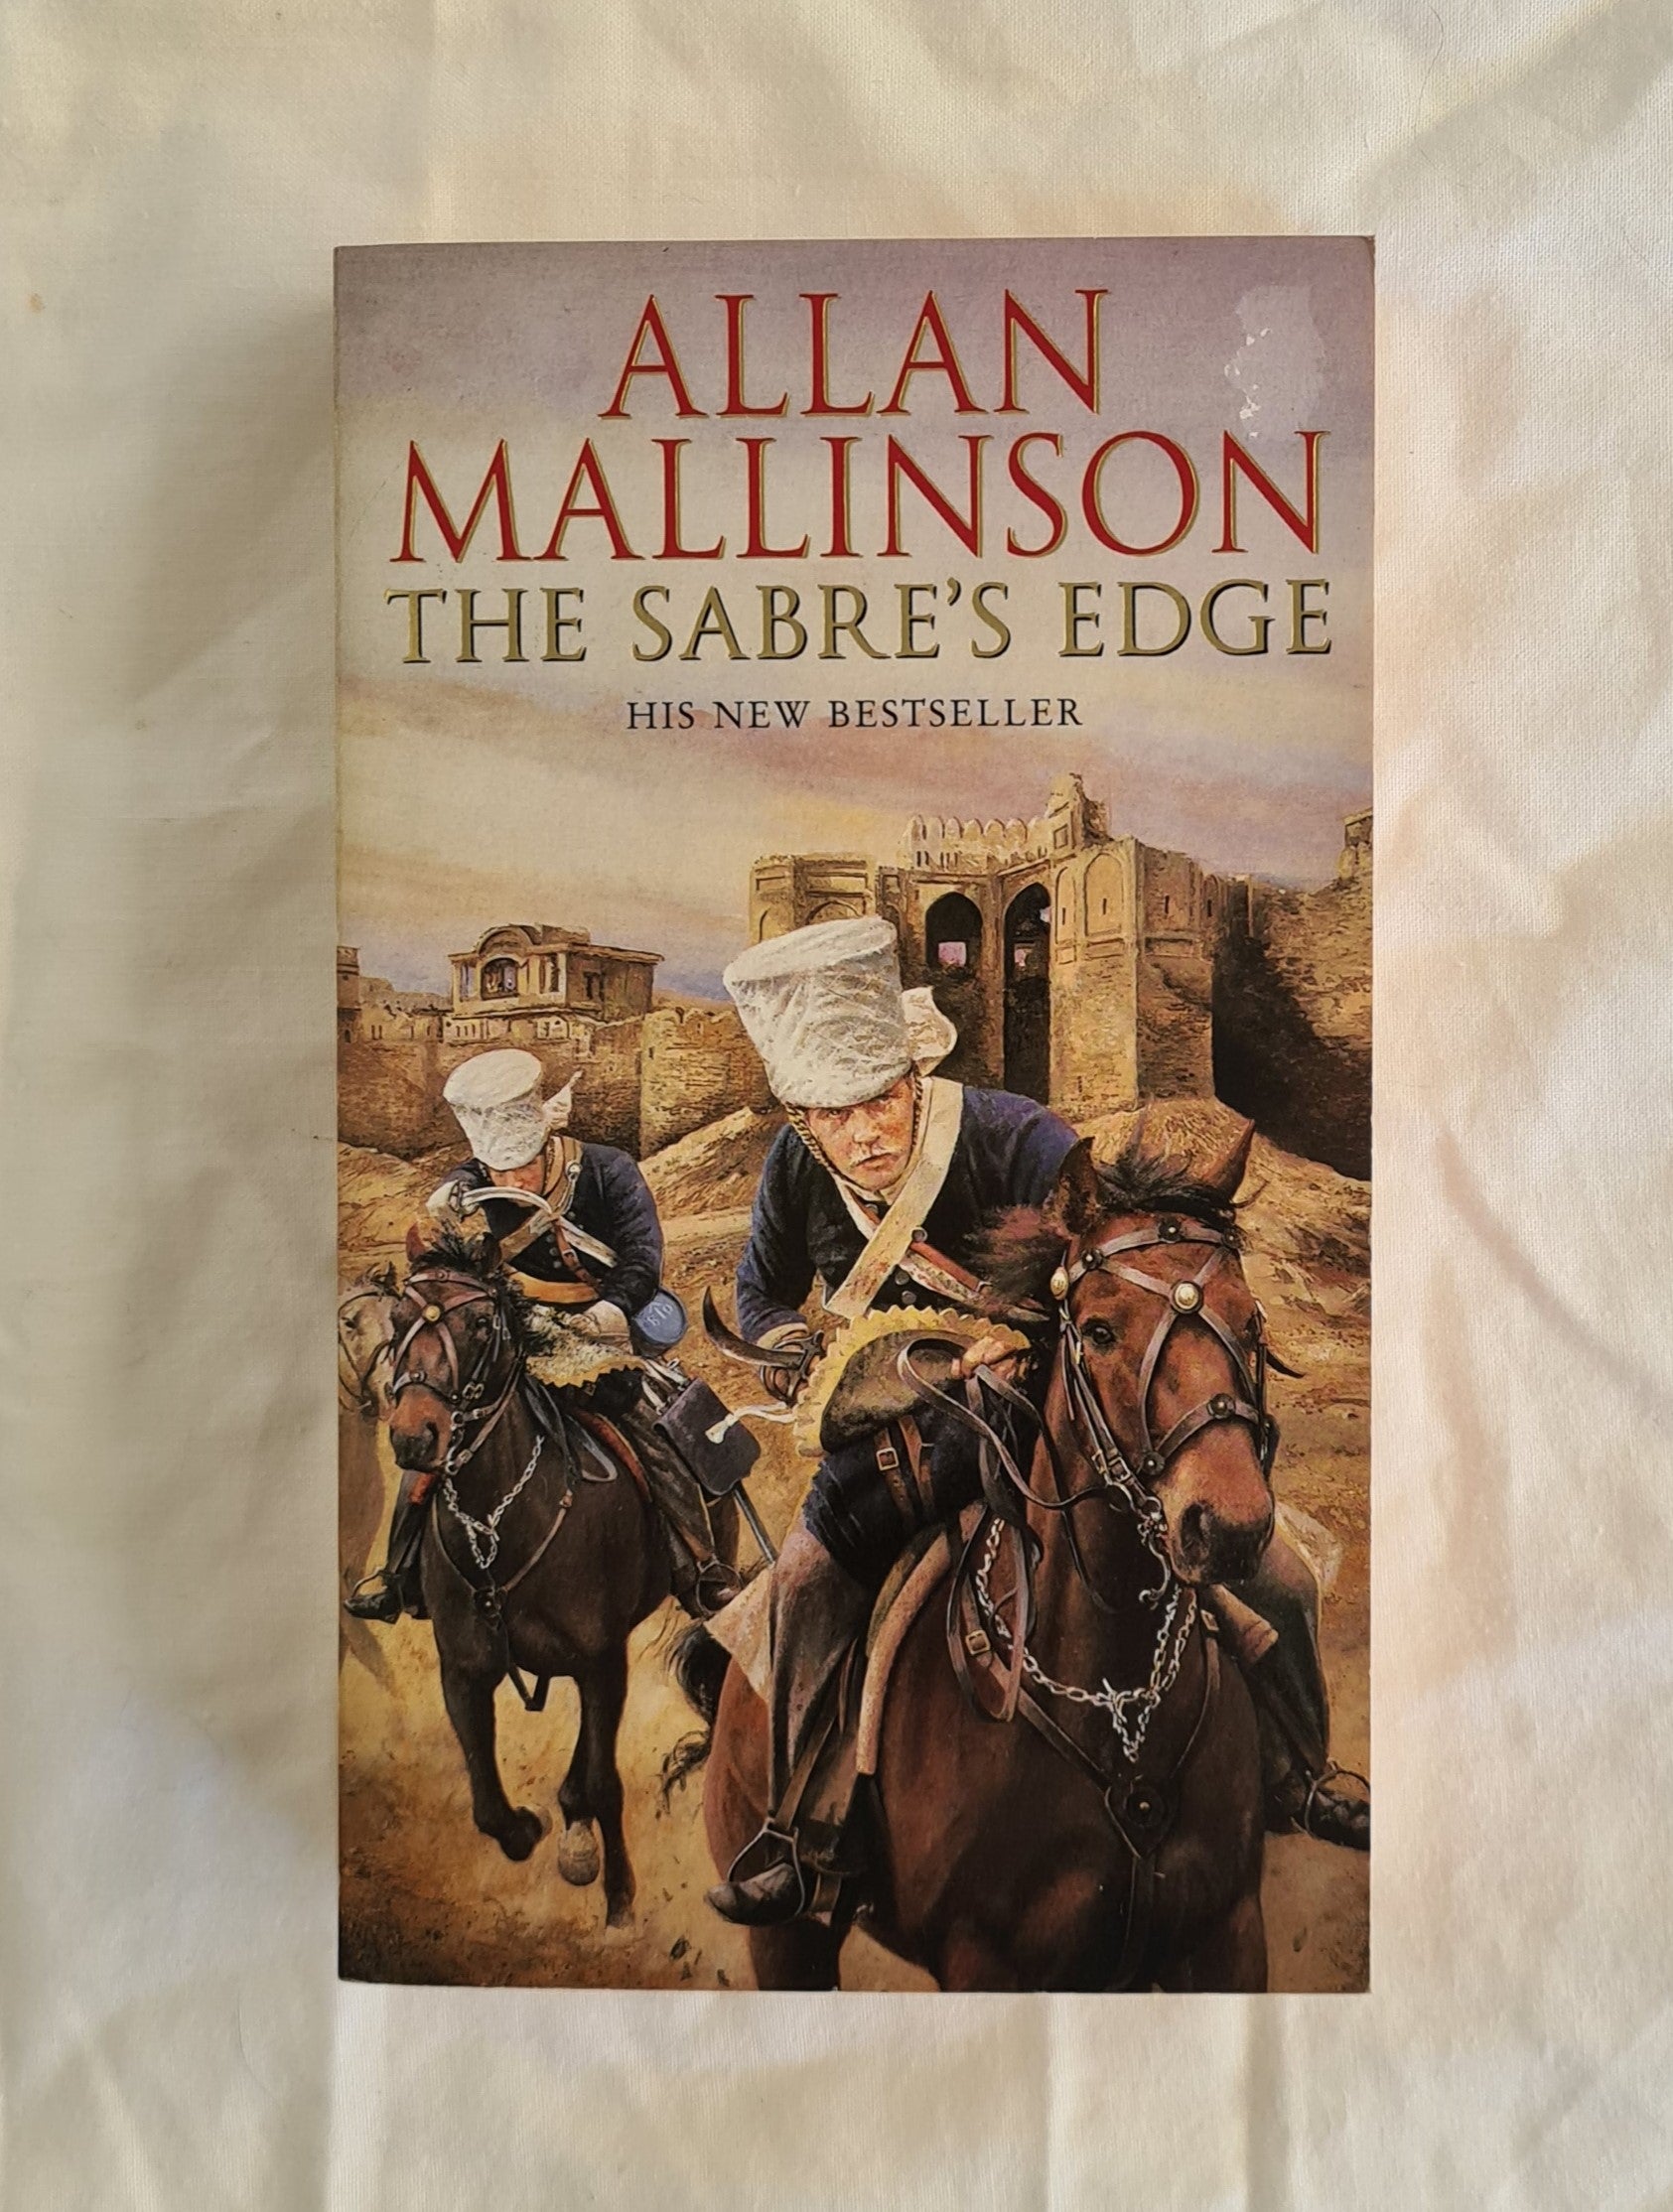 The Sabre’s Edge by Allan Mallinson